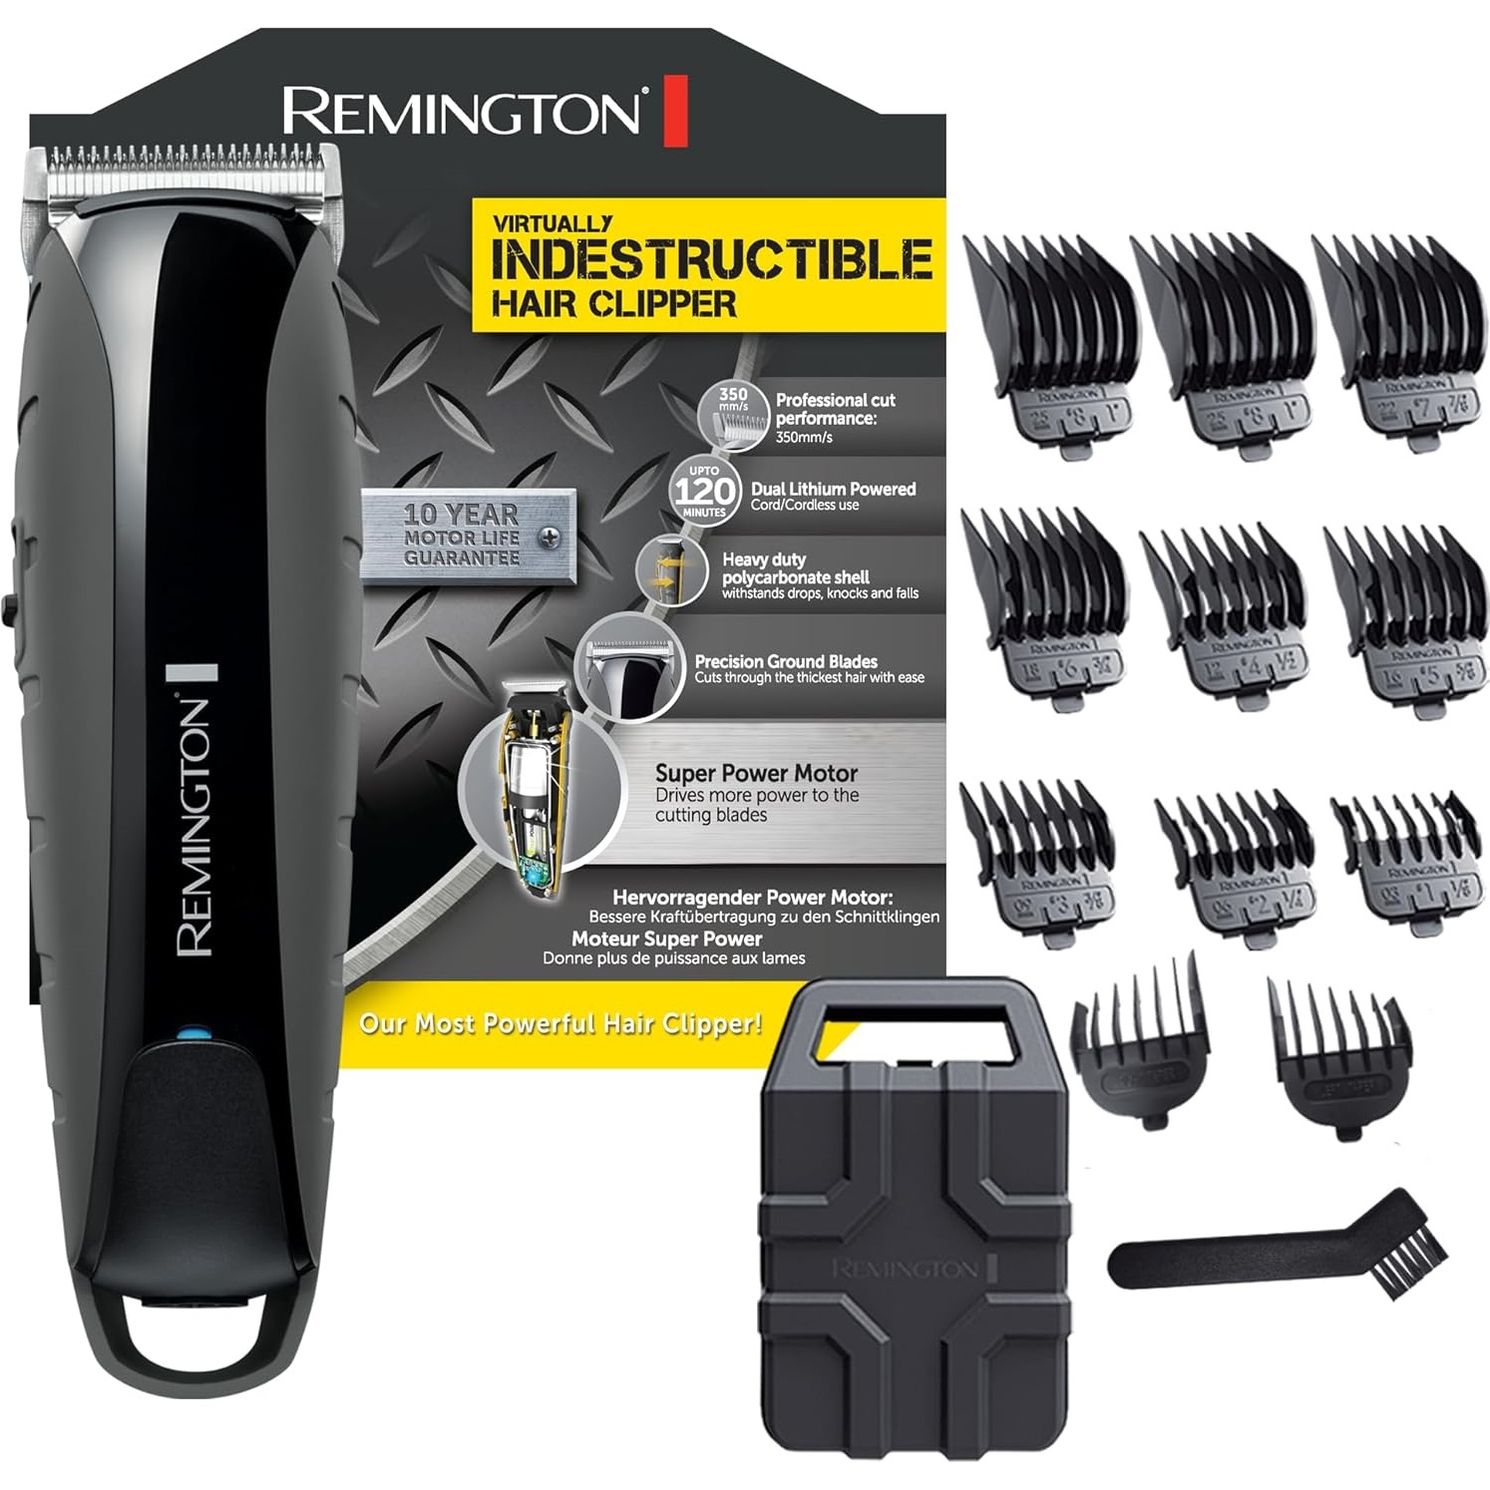 Машинка для стрижки Remington Virtually Indestructible HC5880 серебристая - фото 3